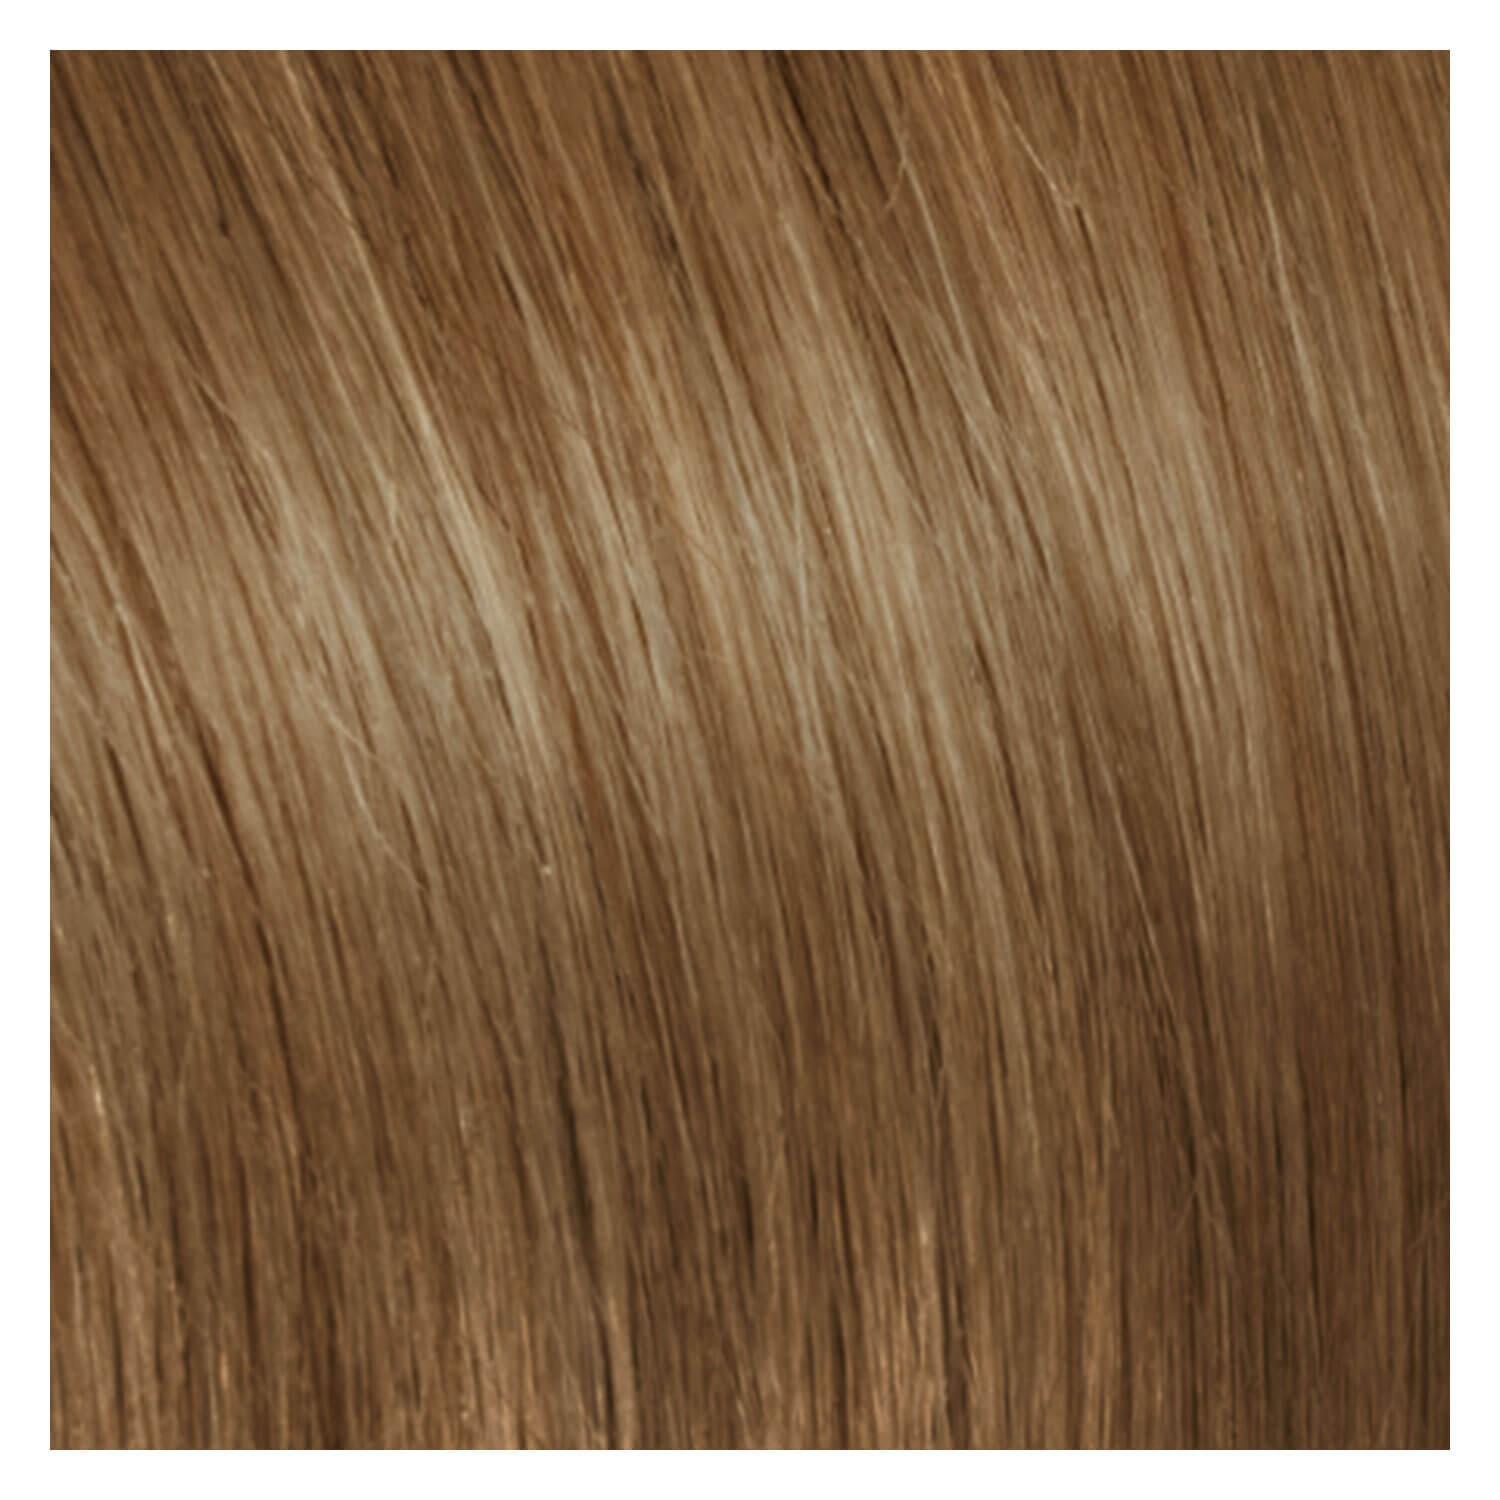 SHE Bonding-System Hair Extensions Wavy - 14 Natürliches Hellblond 55/60cm